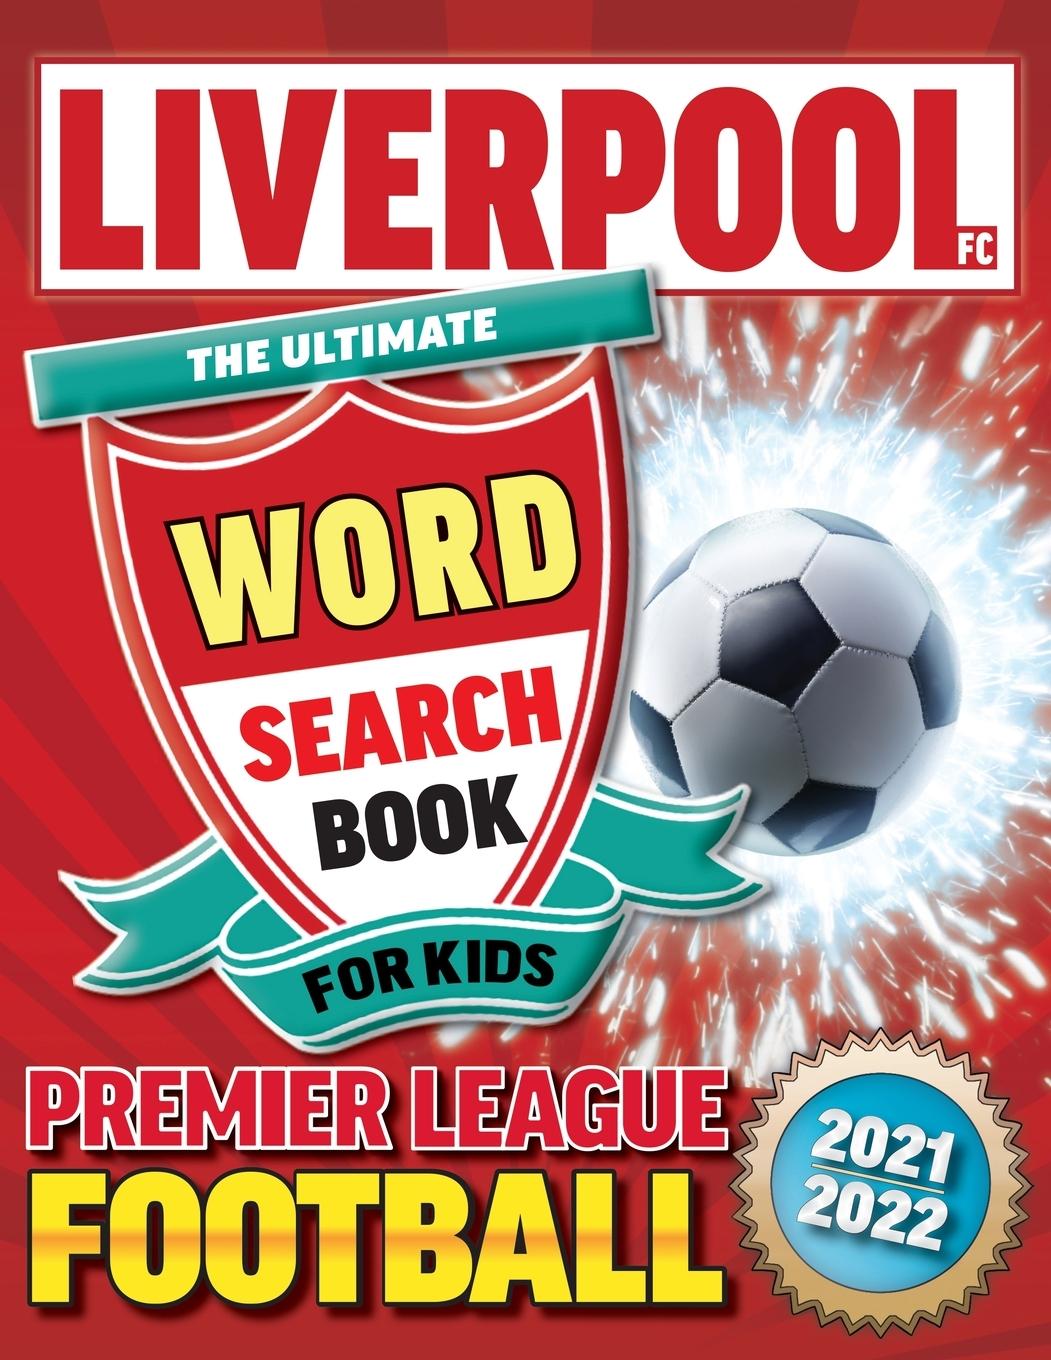 Книга Liverpool FC Premier League Football Word Search Book For Kids 